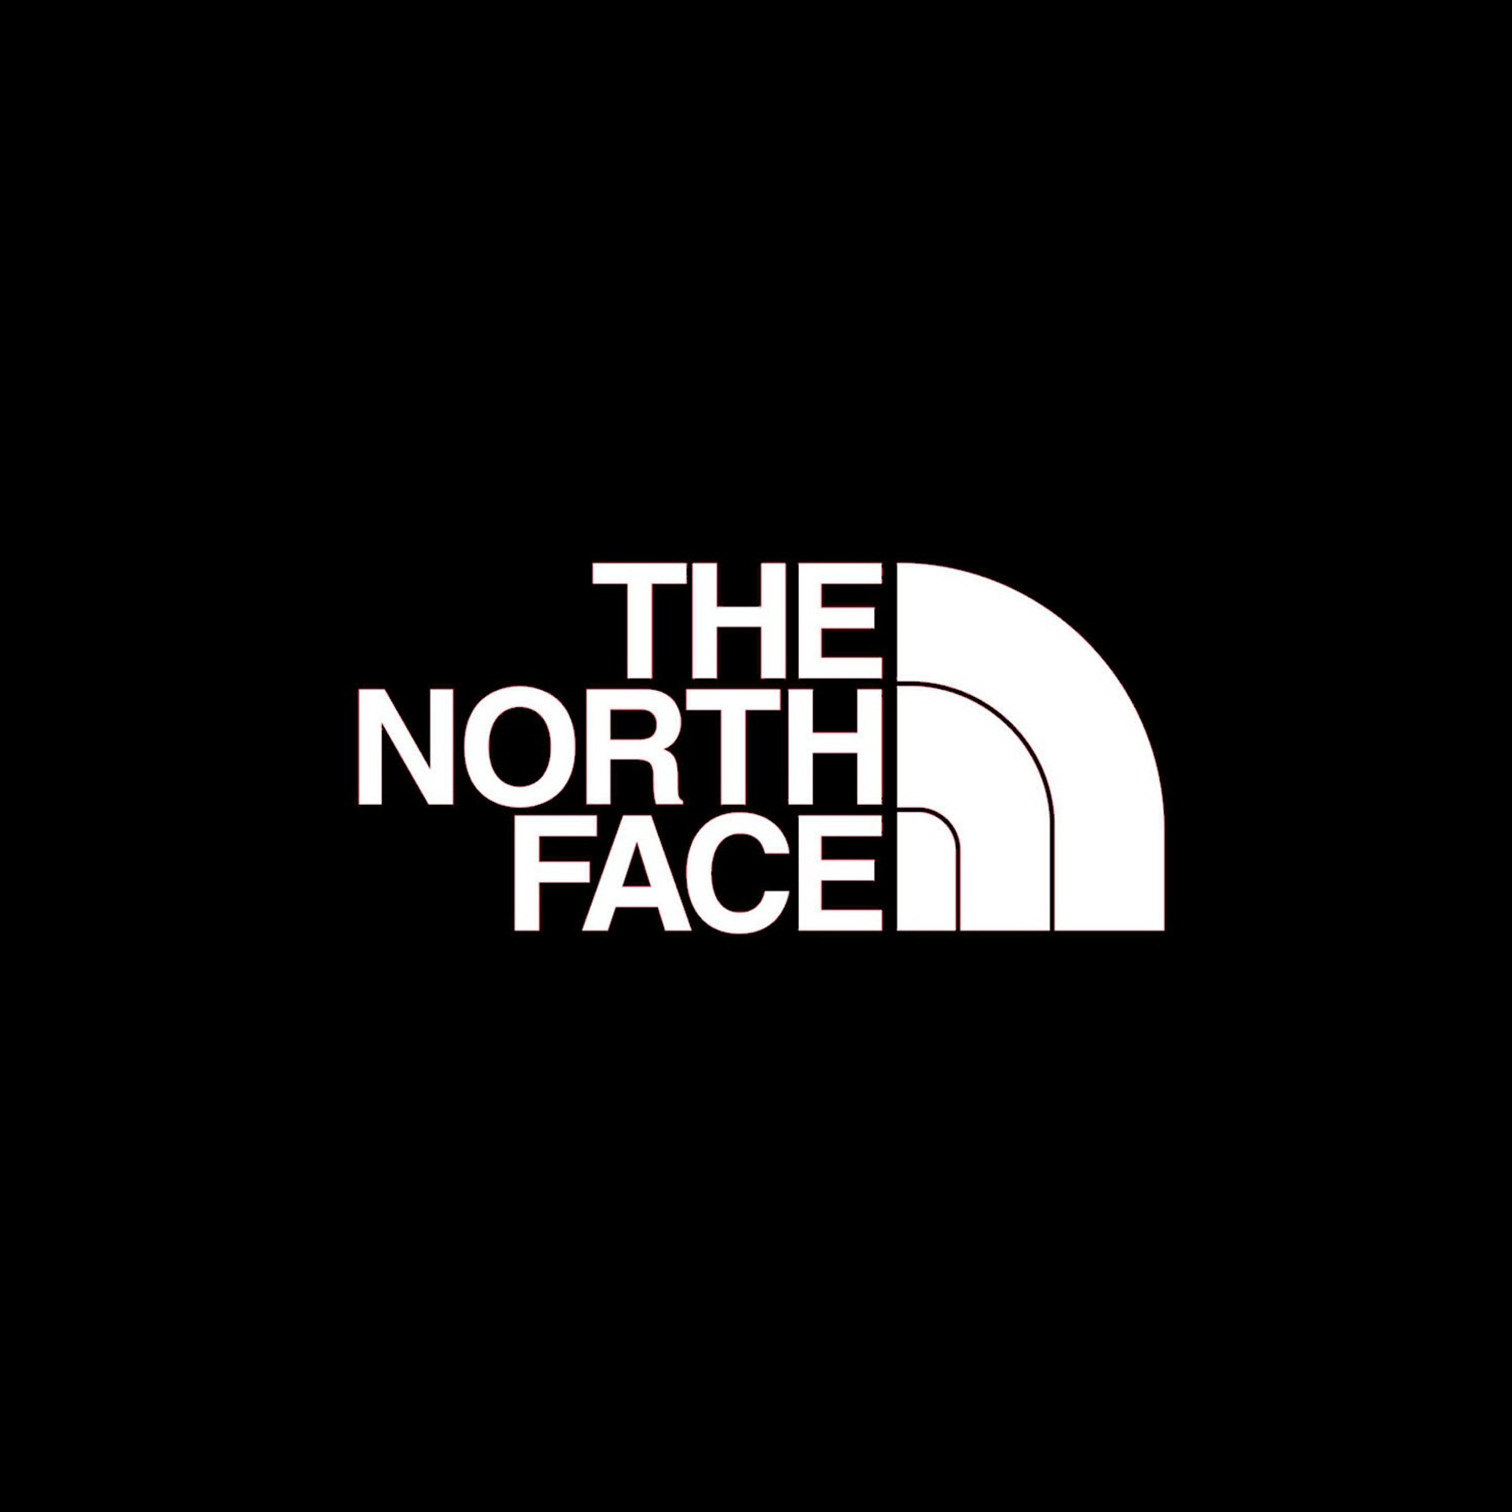 THE NORTH FACE – RMP srl brand & e-commerce images